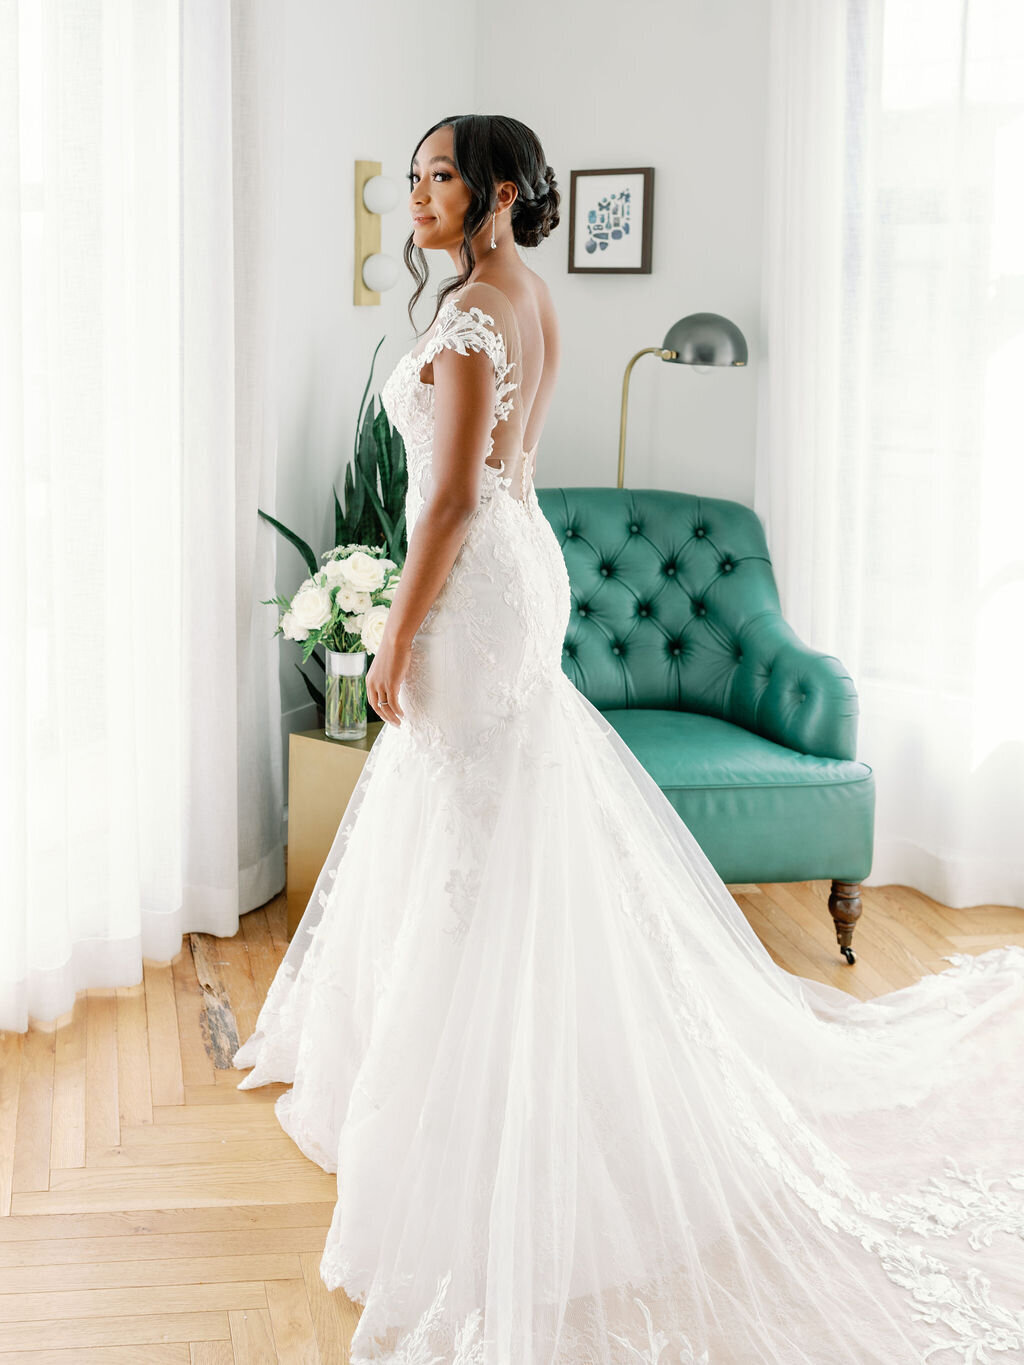 Jayne Heir Weddings and Events - Washington DC Metropolitan Area Wedding and Event Planner - Modern, Stylish, Custom, Top, Best Photo - 11